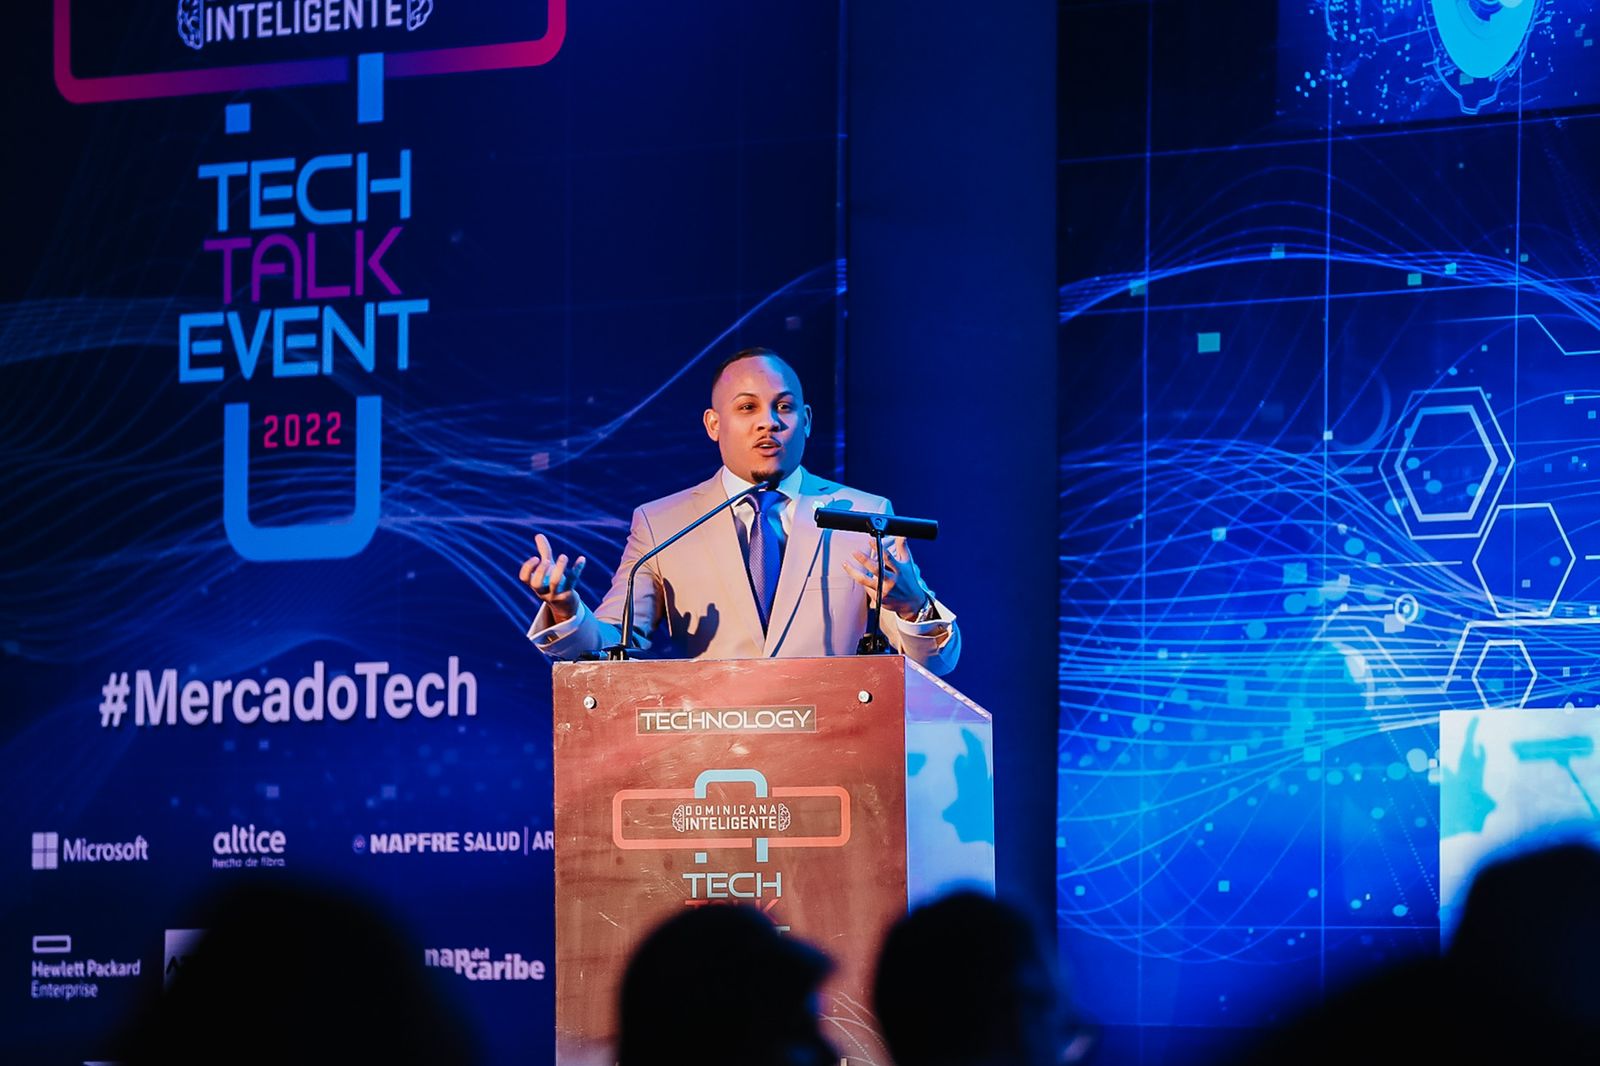 Jairo González speaks at "Dominicana Inteligente: Tech Talk Event 2022" on advances in Blockchain and FinTech technologies thumbnail